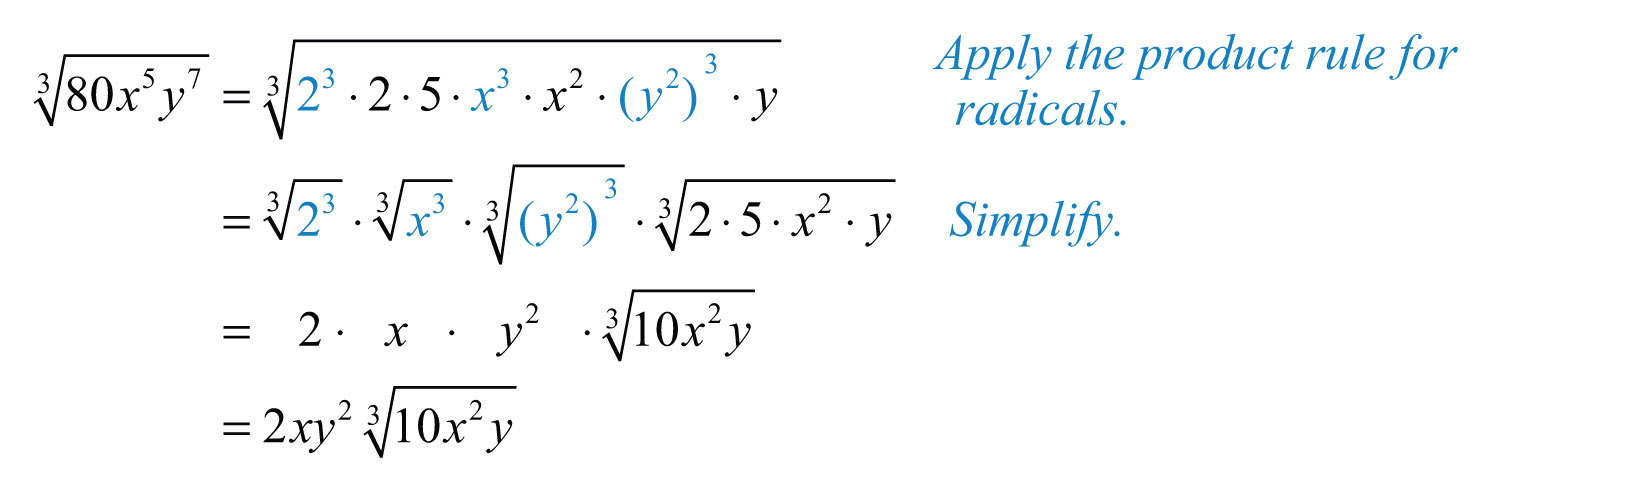 simplifying-radical-expressions